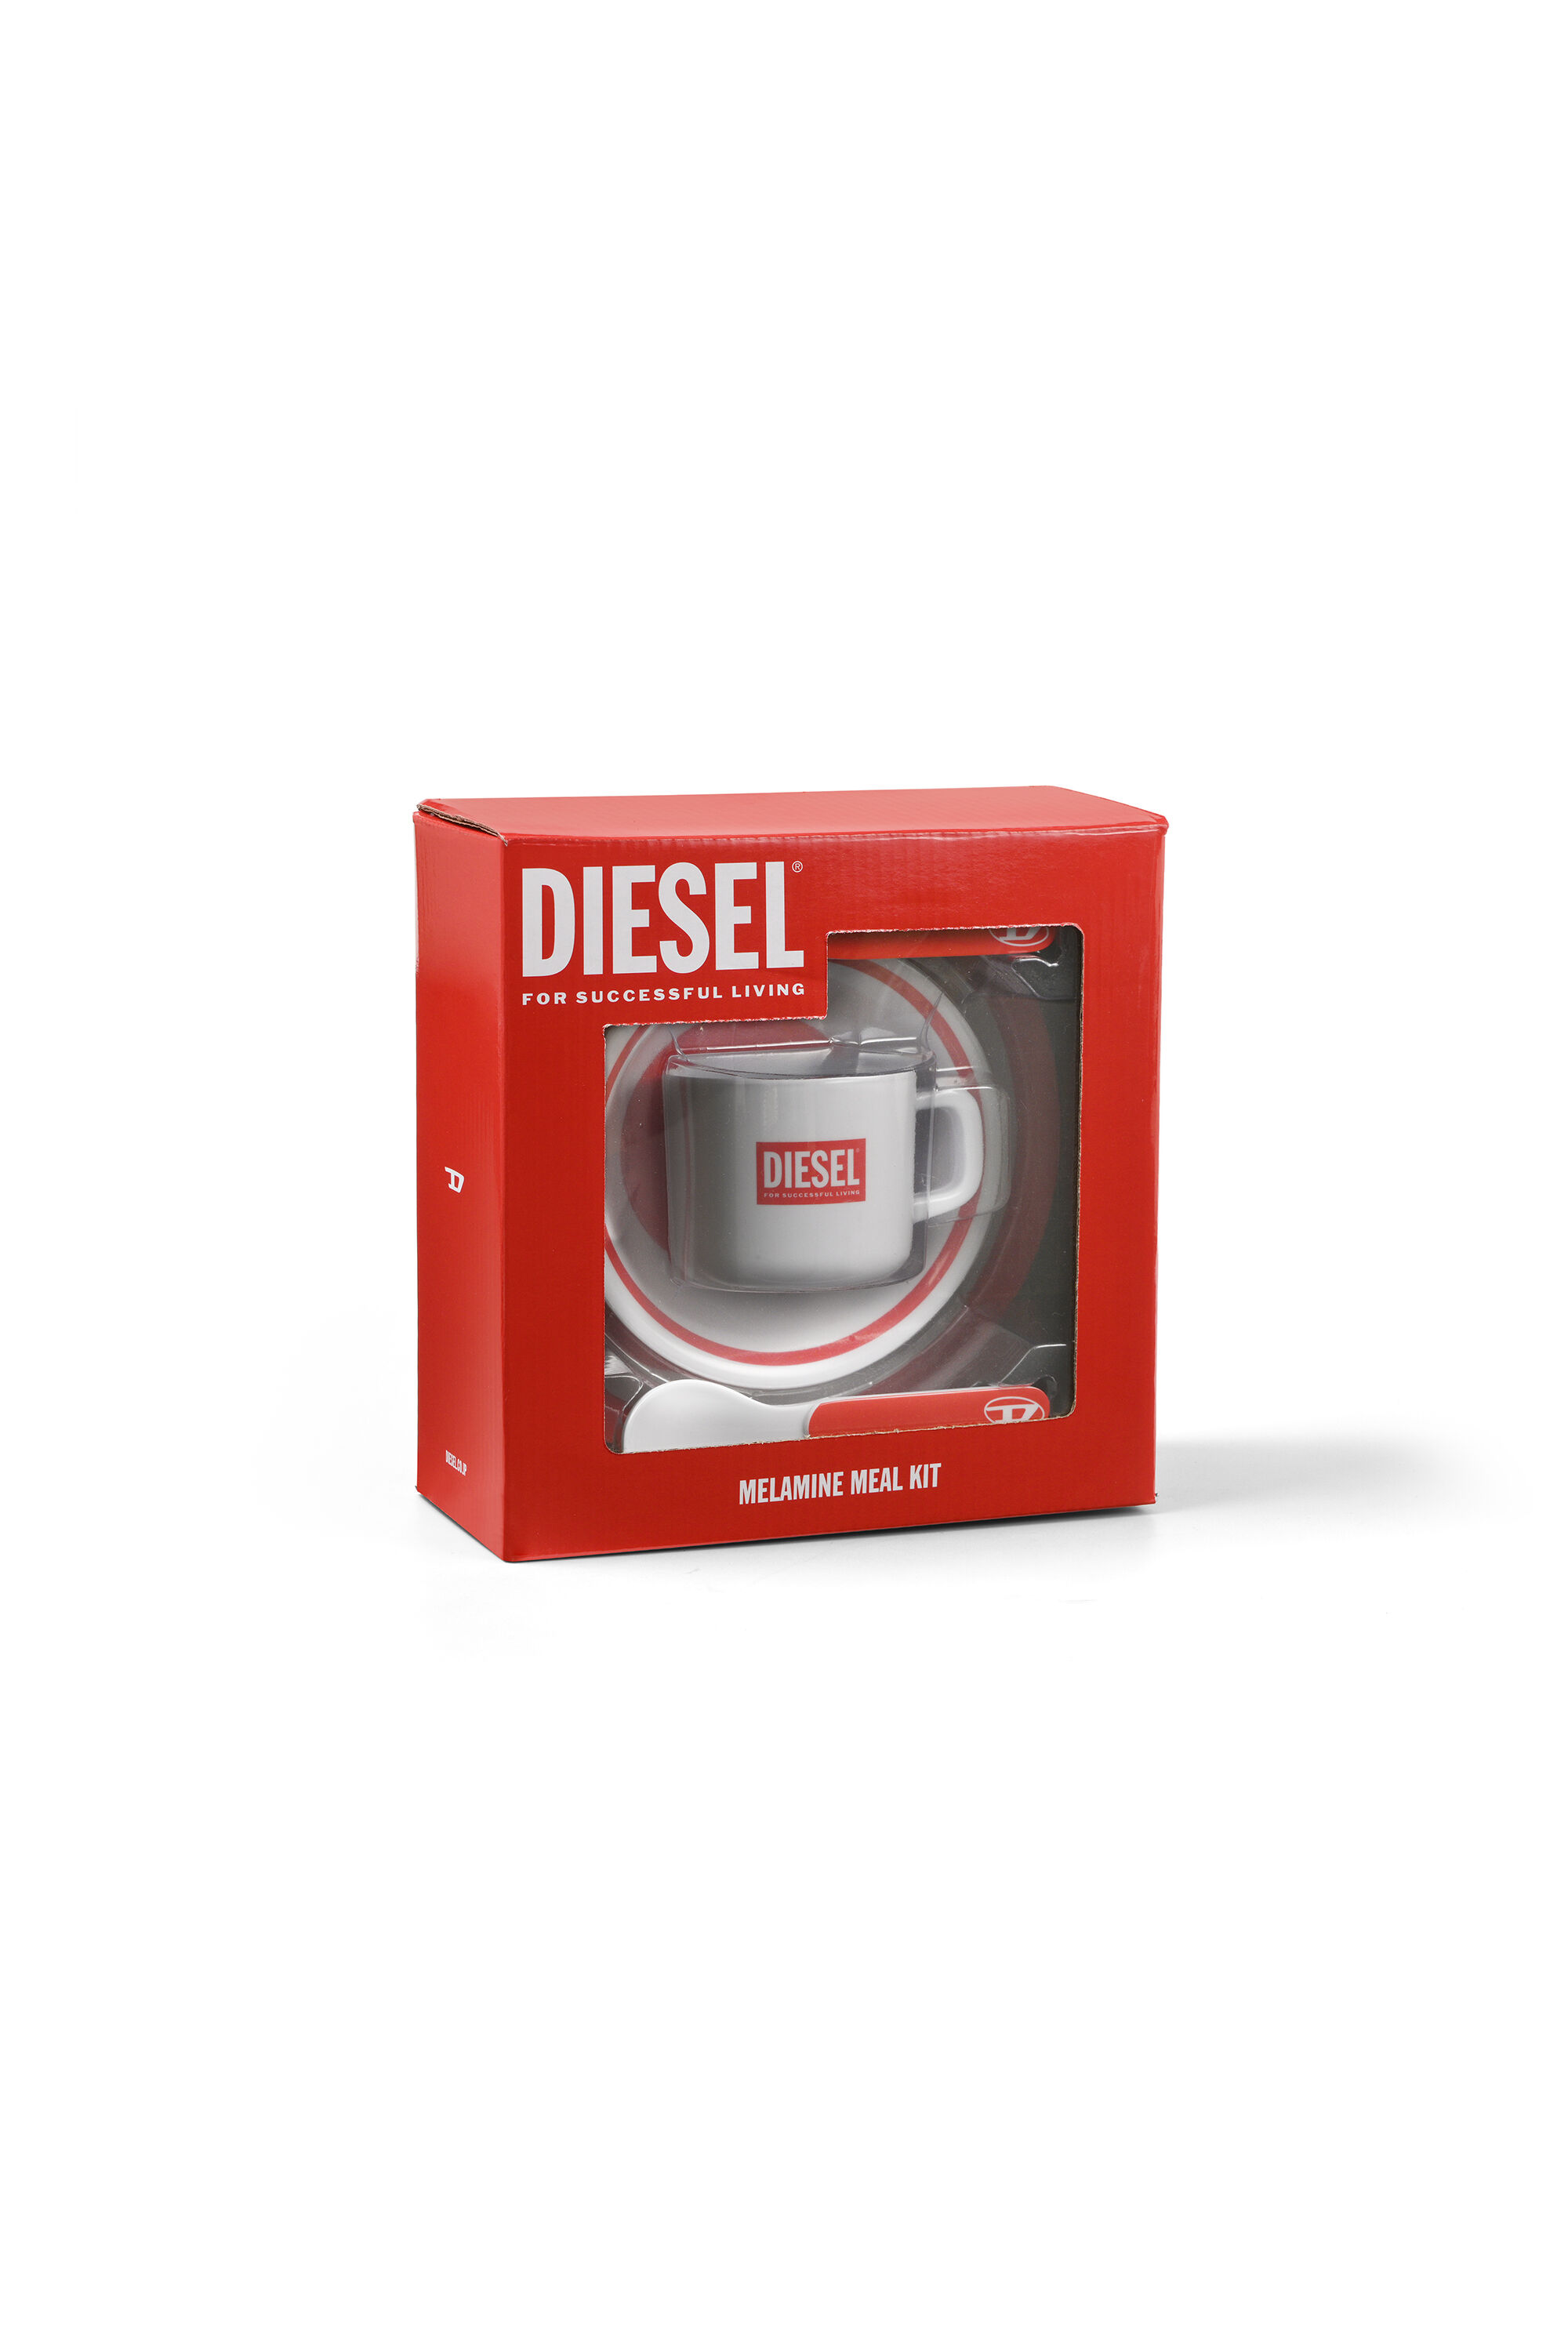 Diesel - MELAMINE MEAL KIT, Unisex MELAMINE MEAL KIT in レッド - Image 2